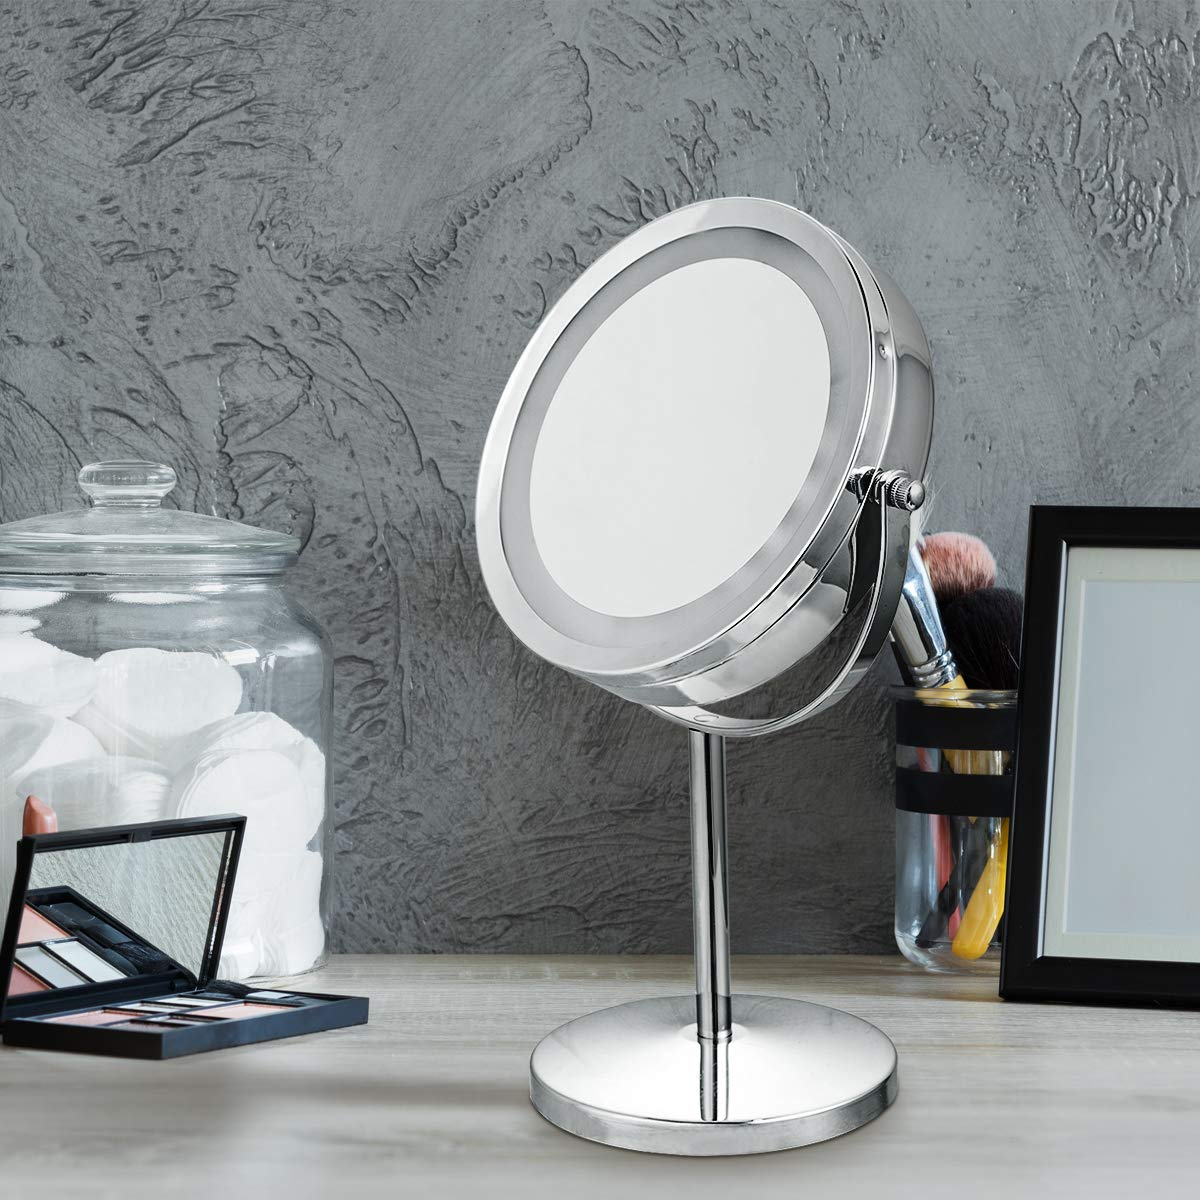 Giantex LED Lighted Makeup Mirror 5X Magnifying